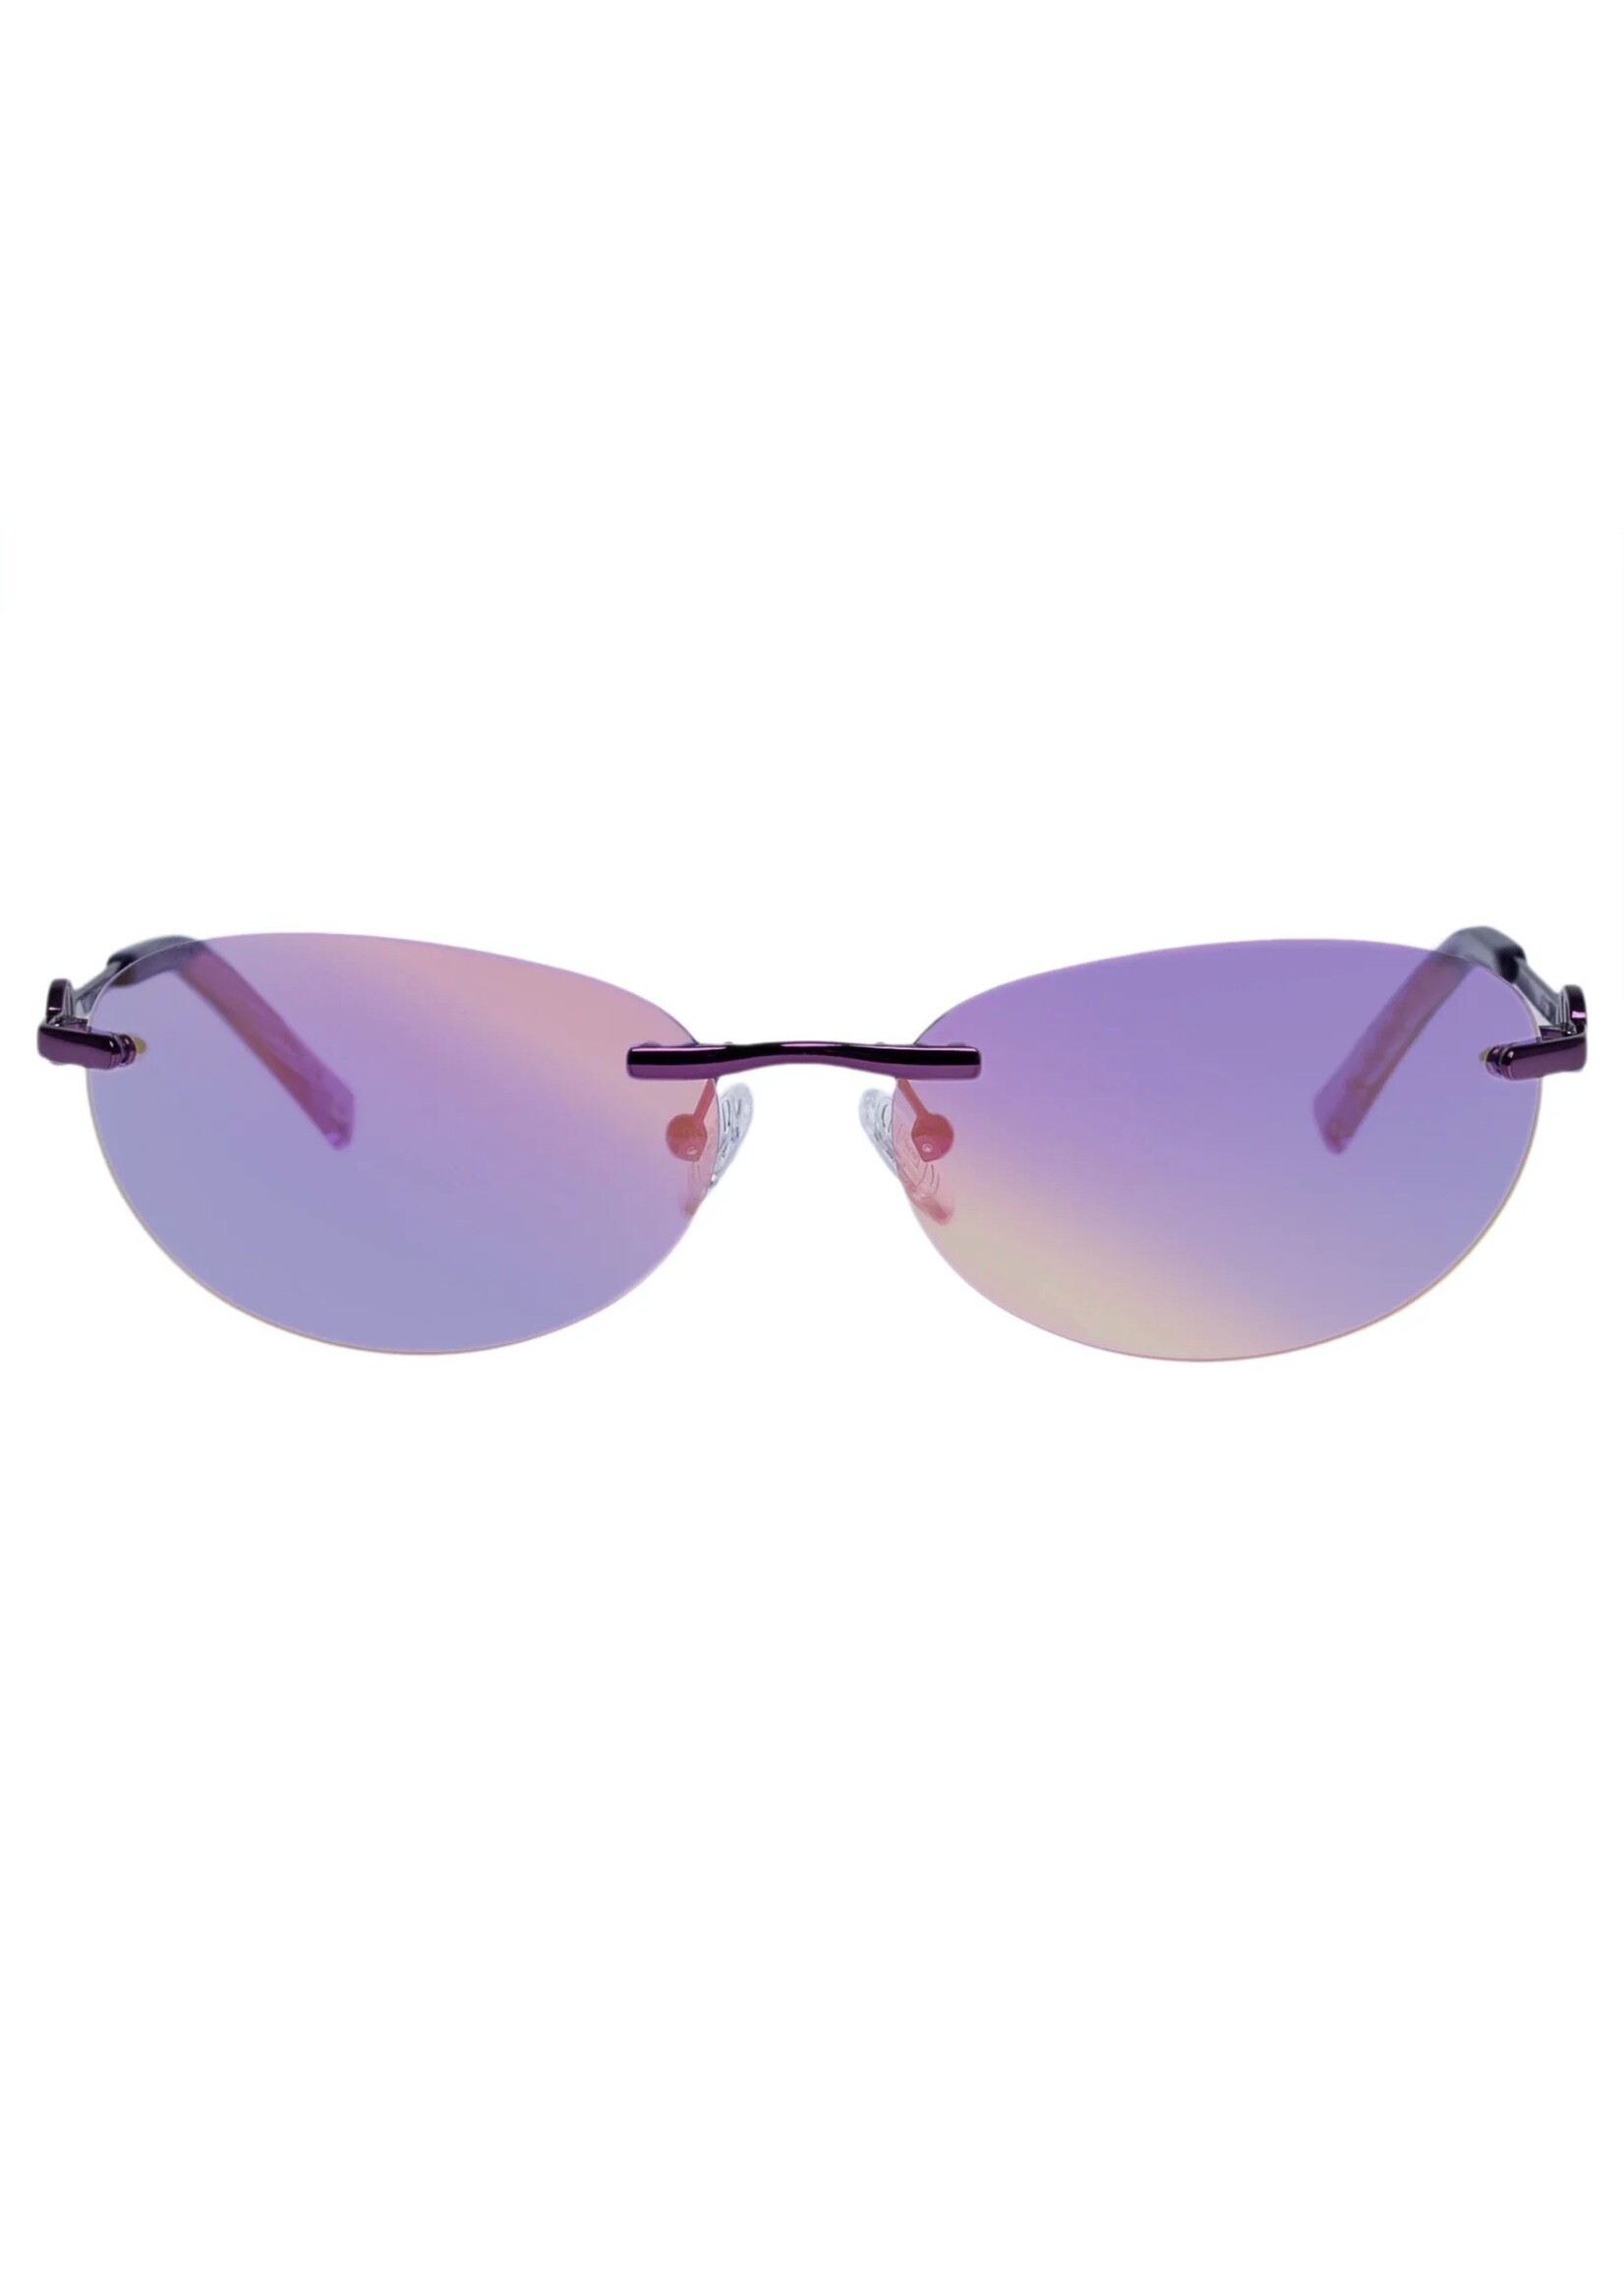 Le Specs Sunglasses "Slinky" by LESPECS